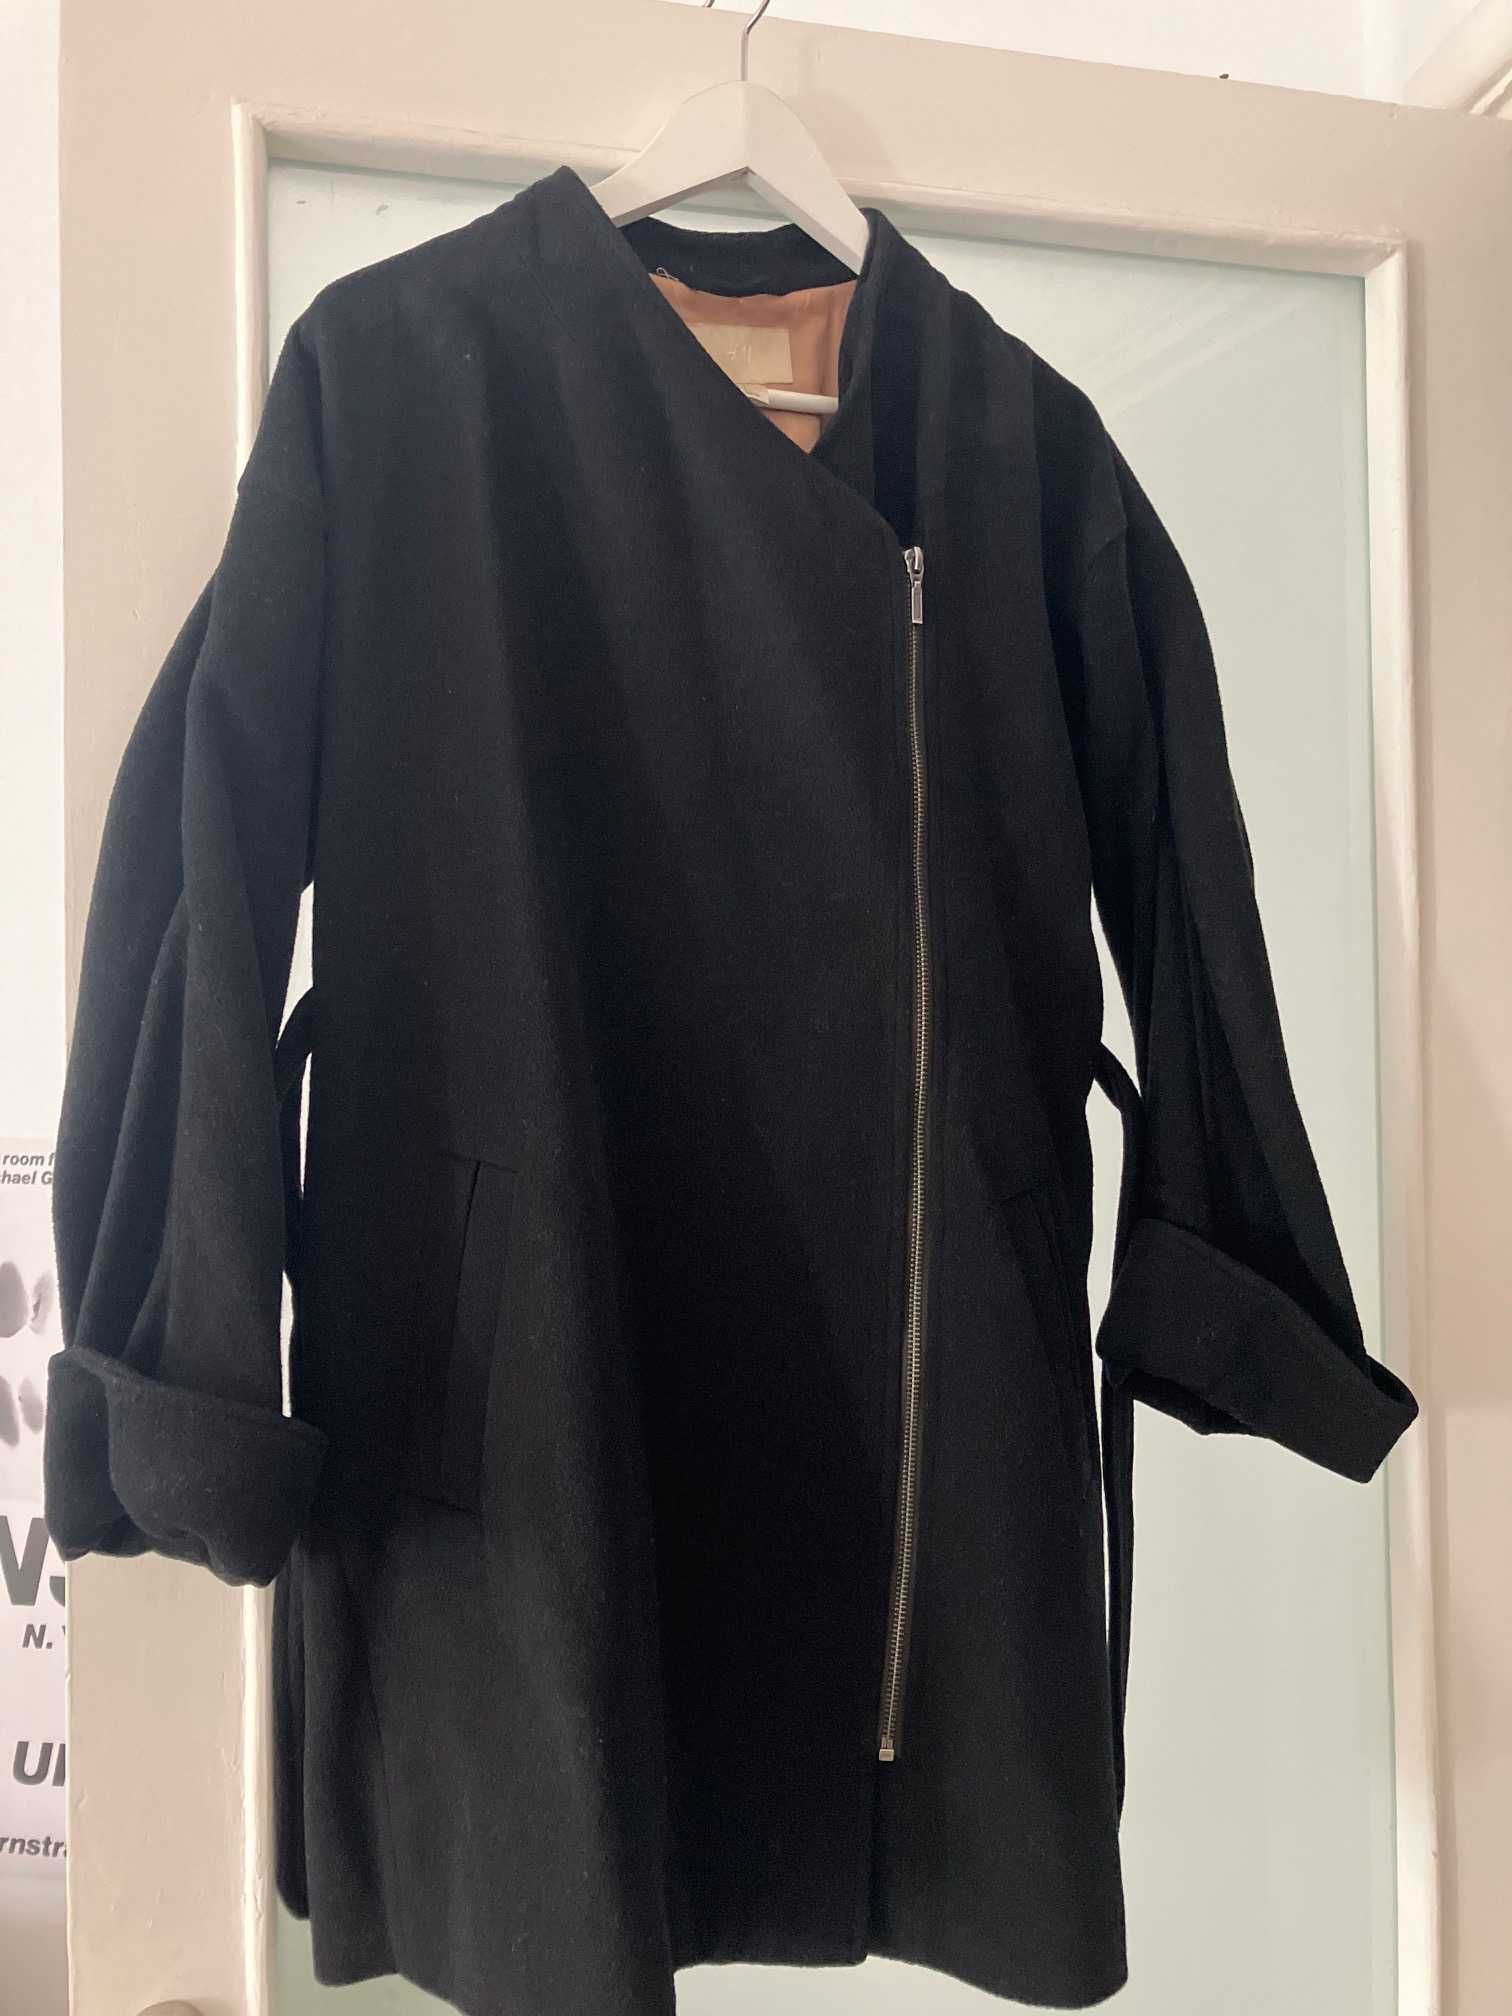 Palton H&M negru, lana 60%, marime S